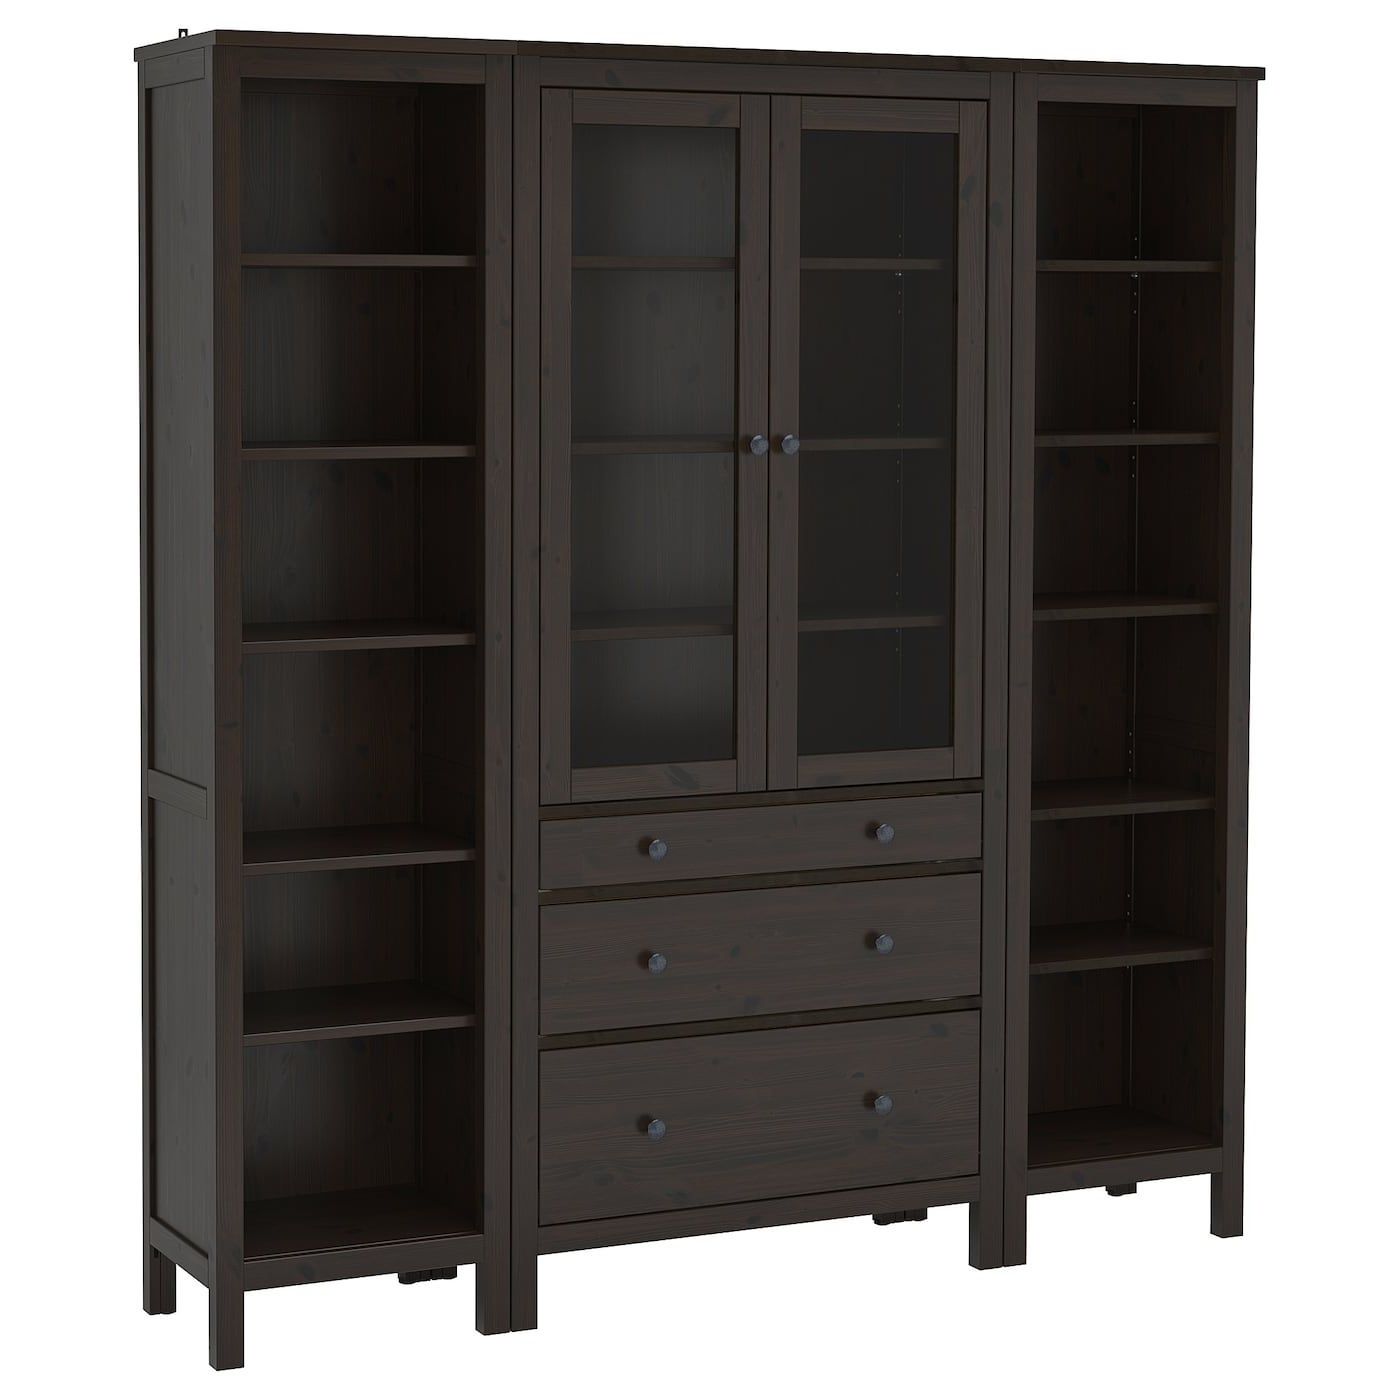 Hemnes Storage Combination W Doors/drawers, Black Brown Regarding Dark Brown Tv Cabinets With 2 Sliding Doors And Drawer (View 16 of 20)